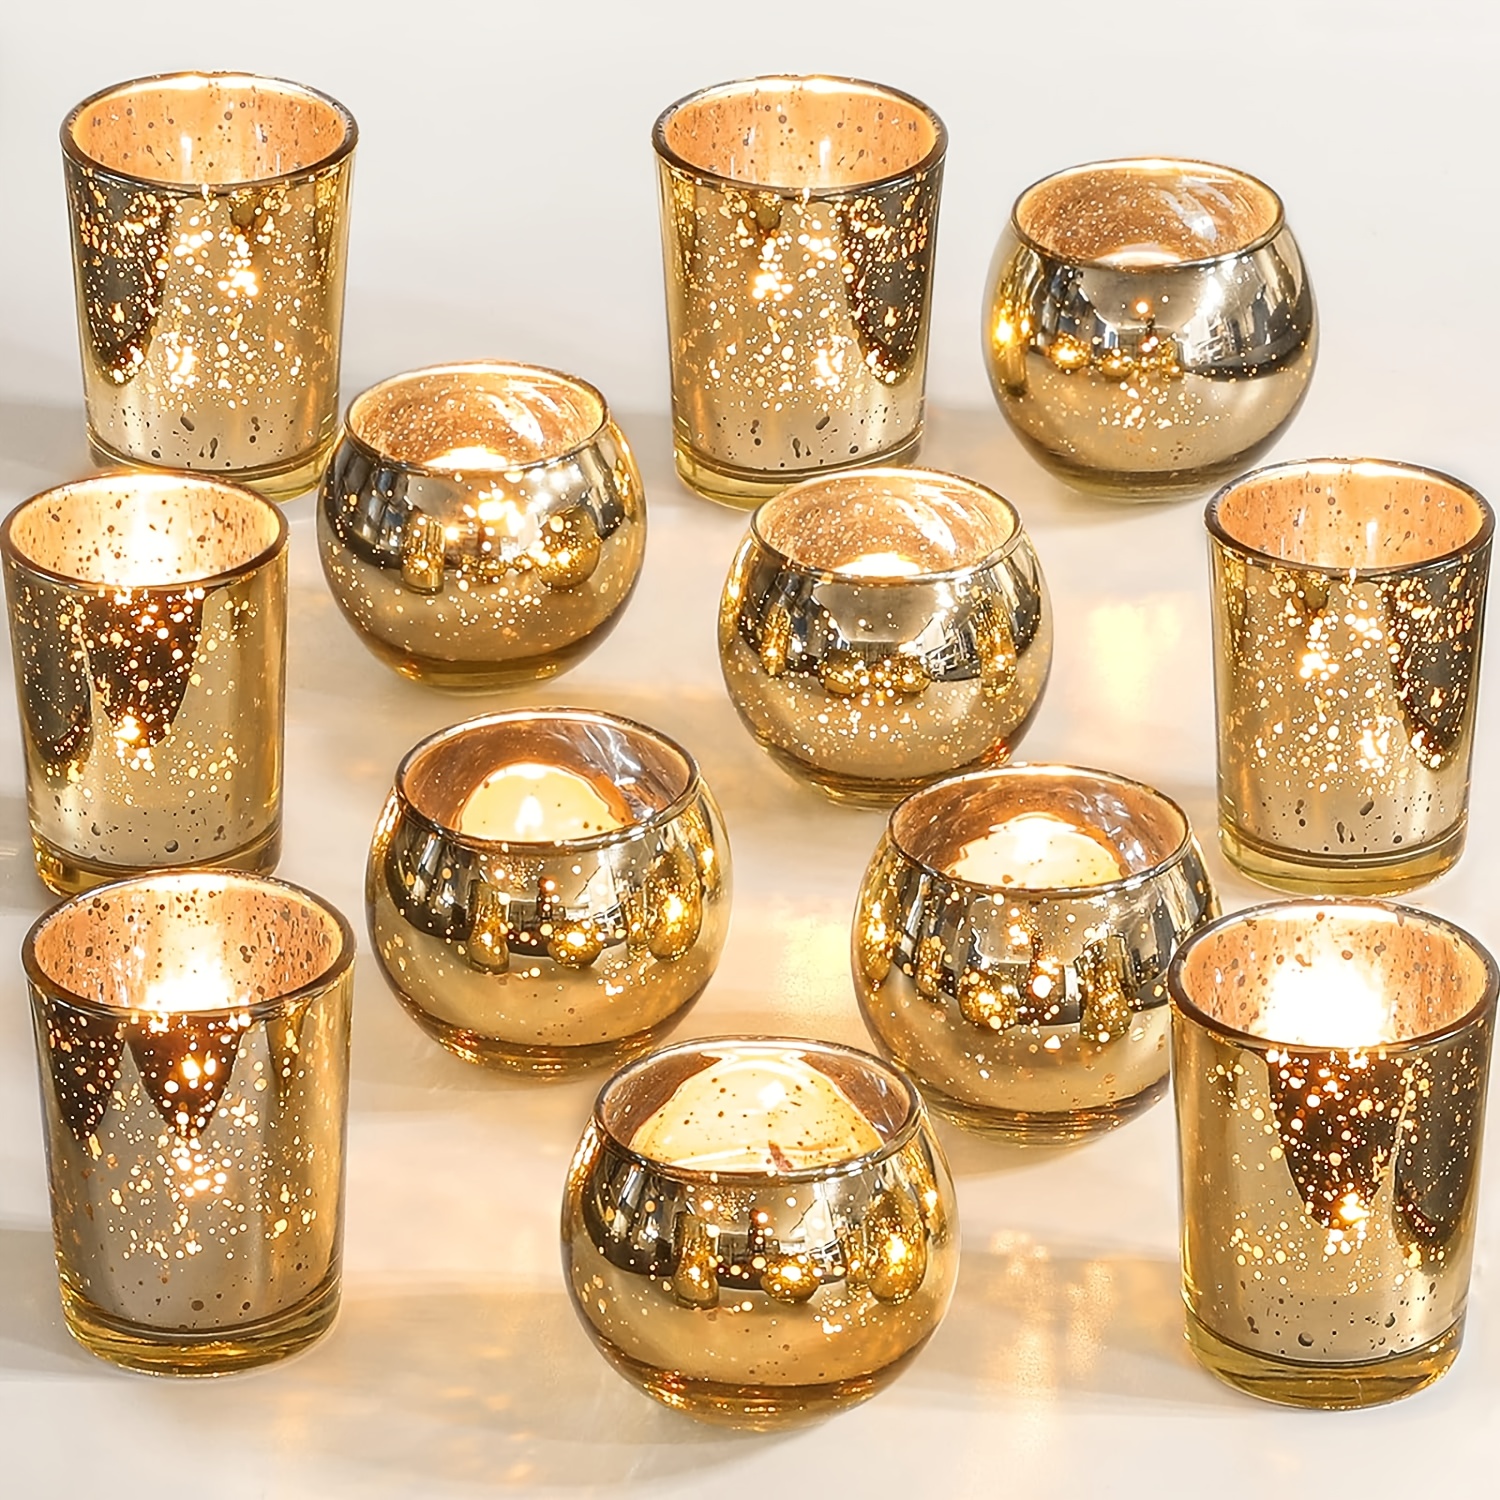 

12pcs, Golden Votive Candle Holders, Mercury Glass Candle Holder, Wedding Centerpieces For Tables, Golden Bridal Shower Party Diwali Table Decorations